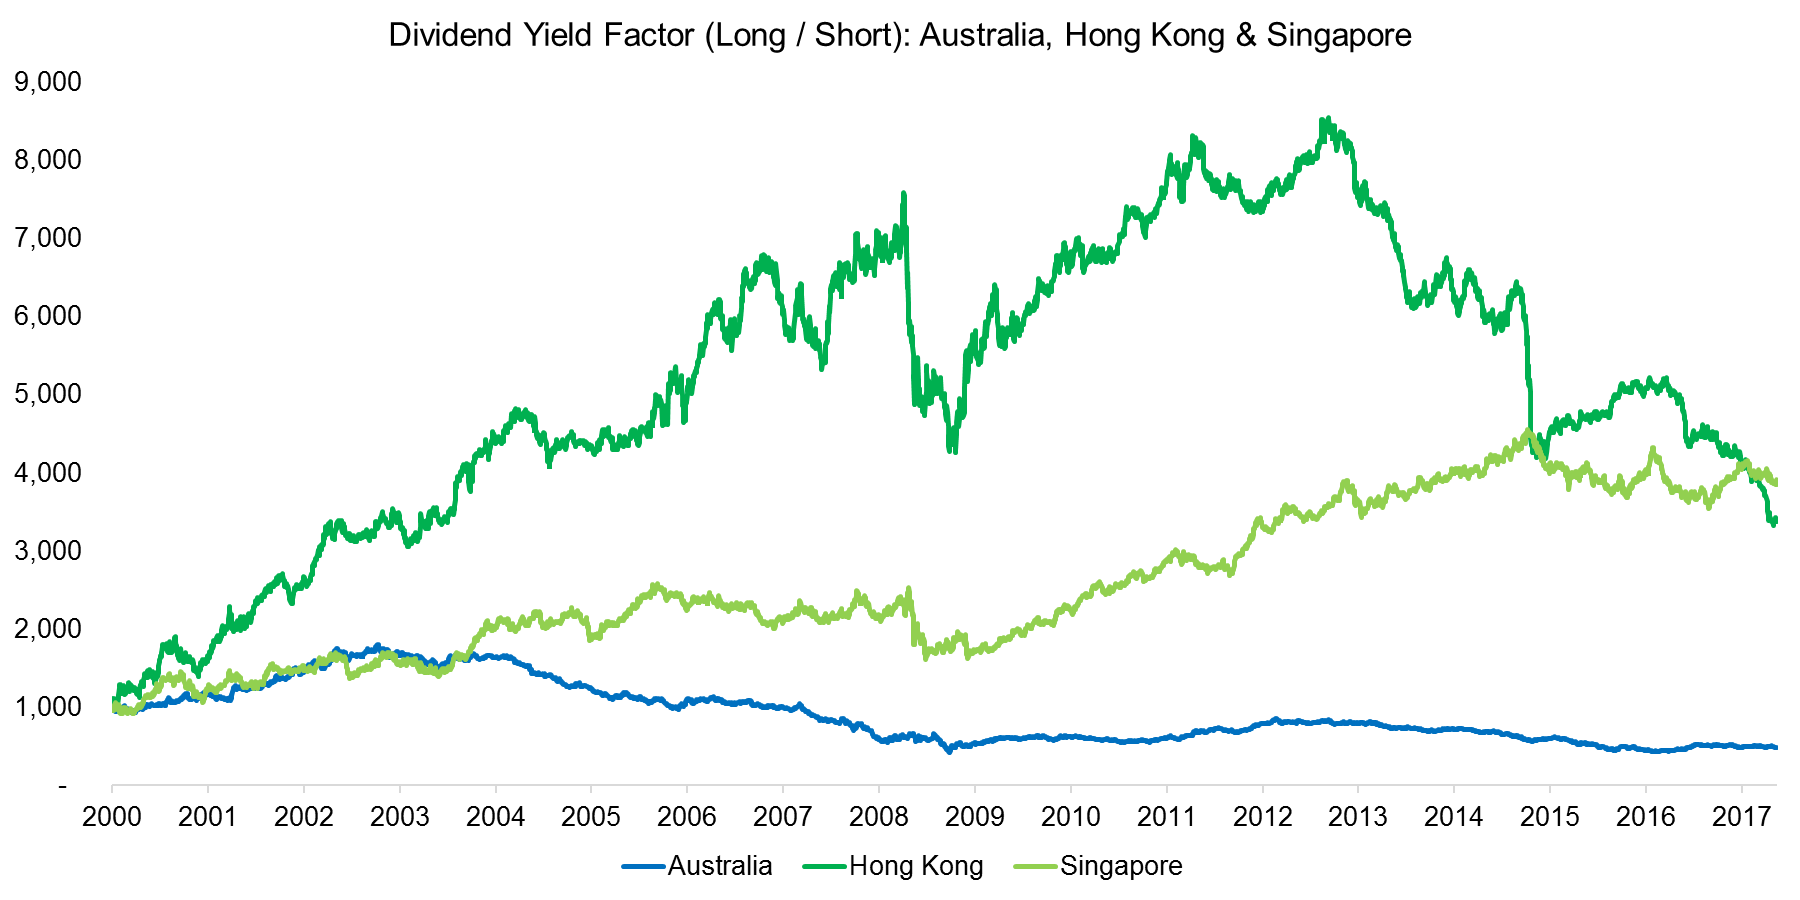 Dividend Yield Factor (Long Short) Australia, Hong Kong & Singapore